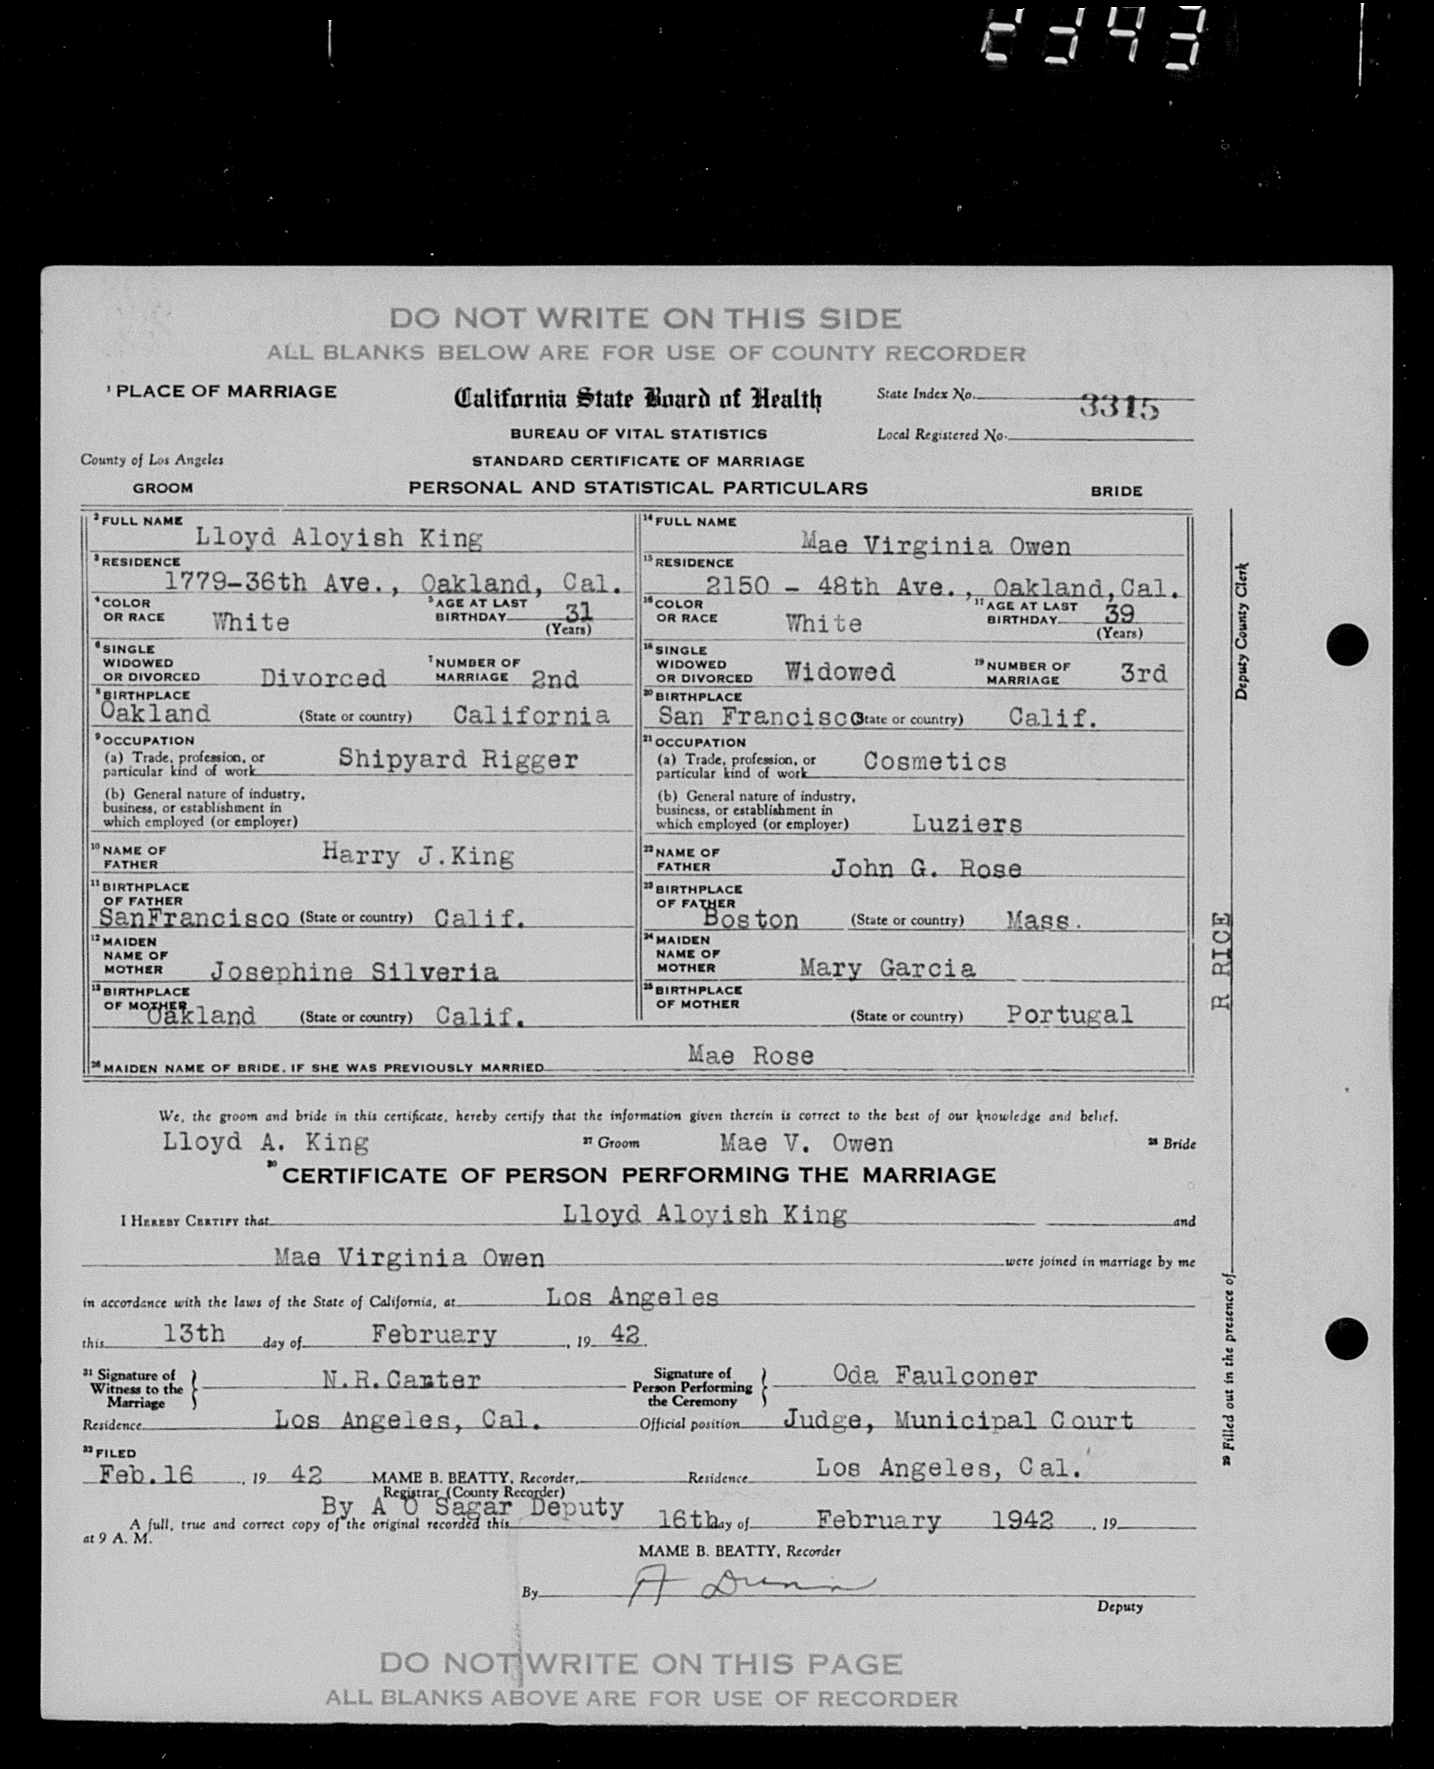 Certificate of marriage of Lloyd Aloyish King and Mae Virginia Owen